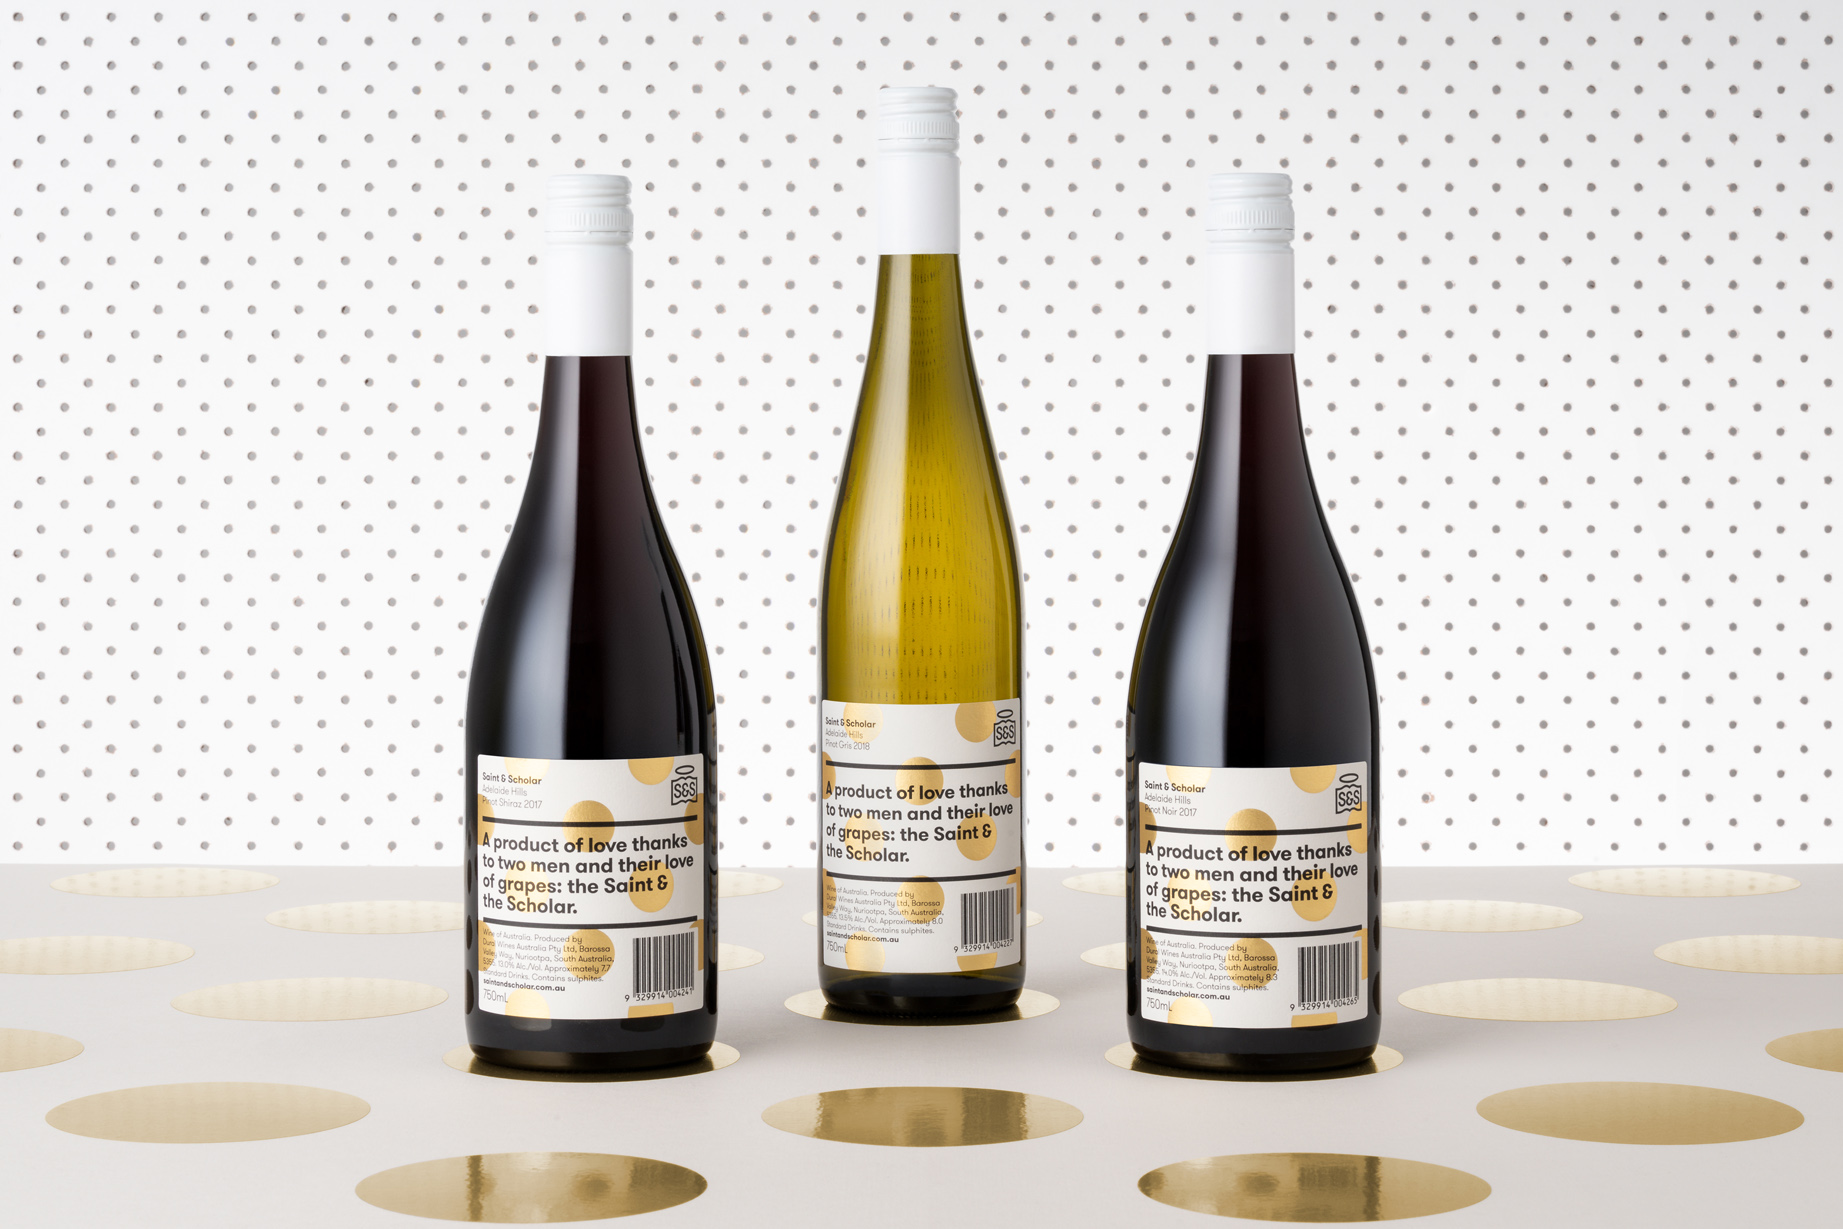 ‘Saint & Scholar’ Wine Packaging Design from Australia